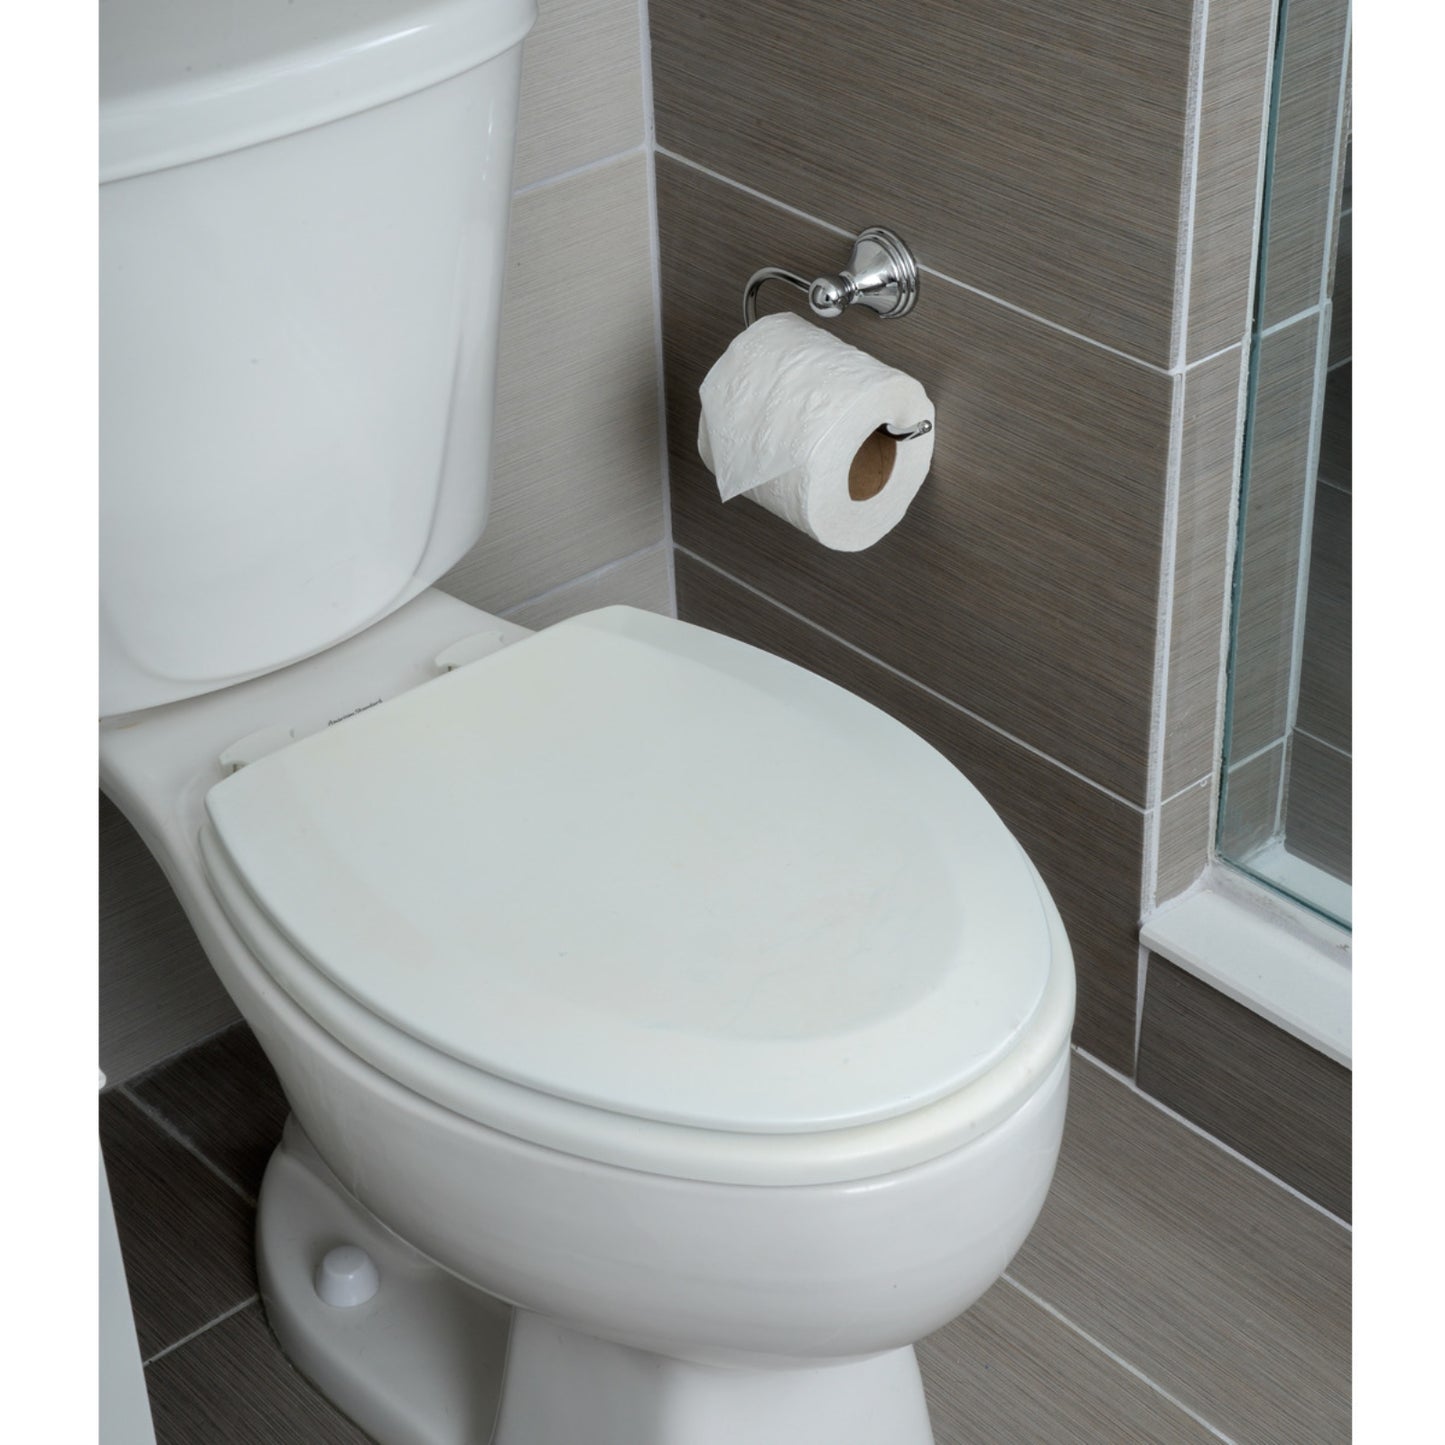 South Main Hardware Modern Euro Toilet Paper Holder - Polished Chrome